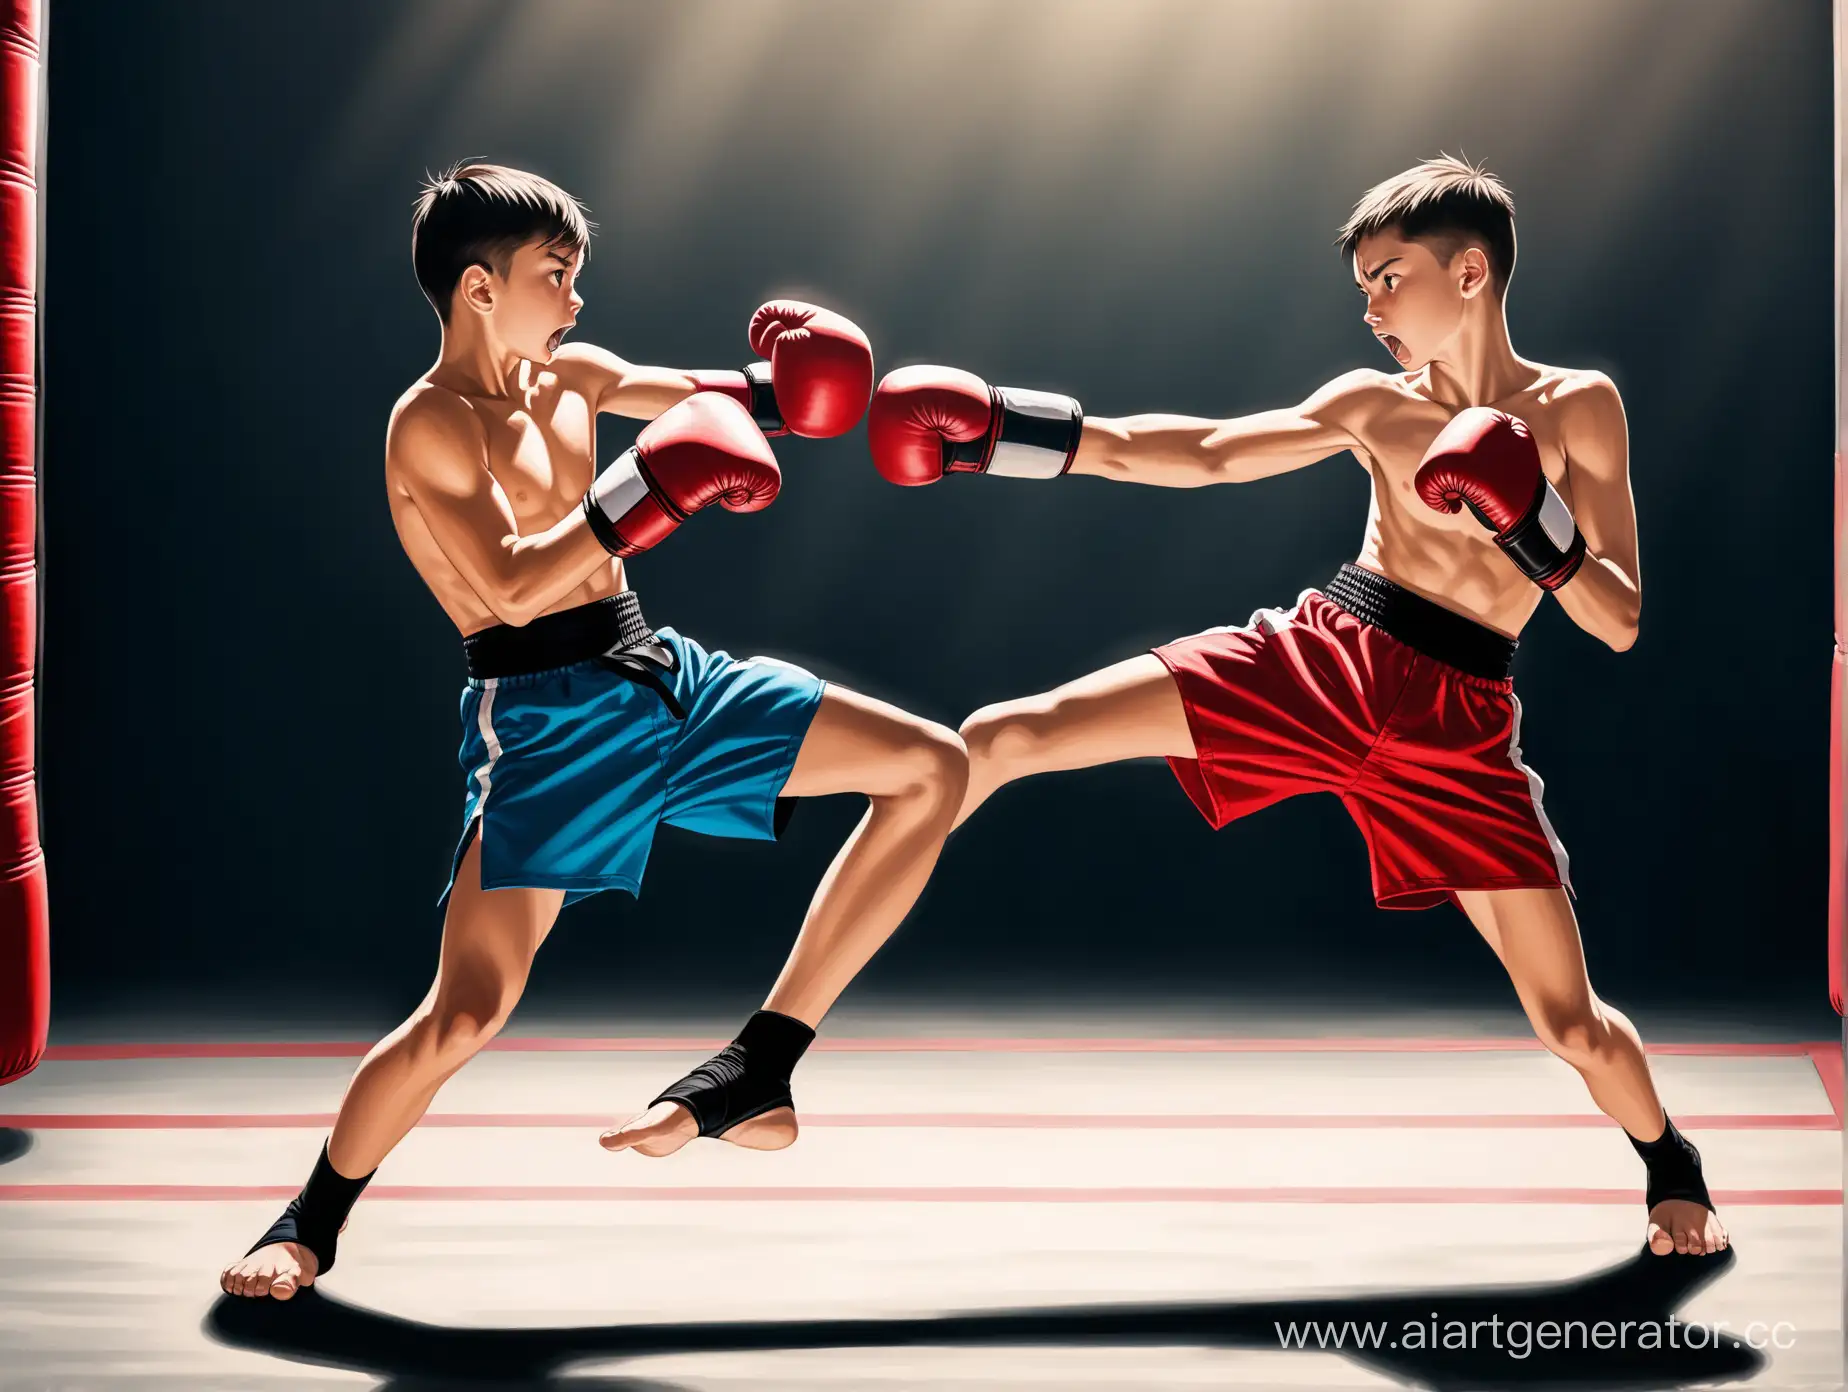 Teenage-Kickboxers-Engaged-in-a-Fierce-Struggle